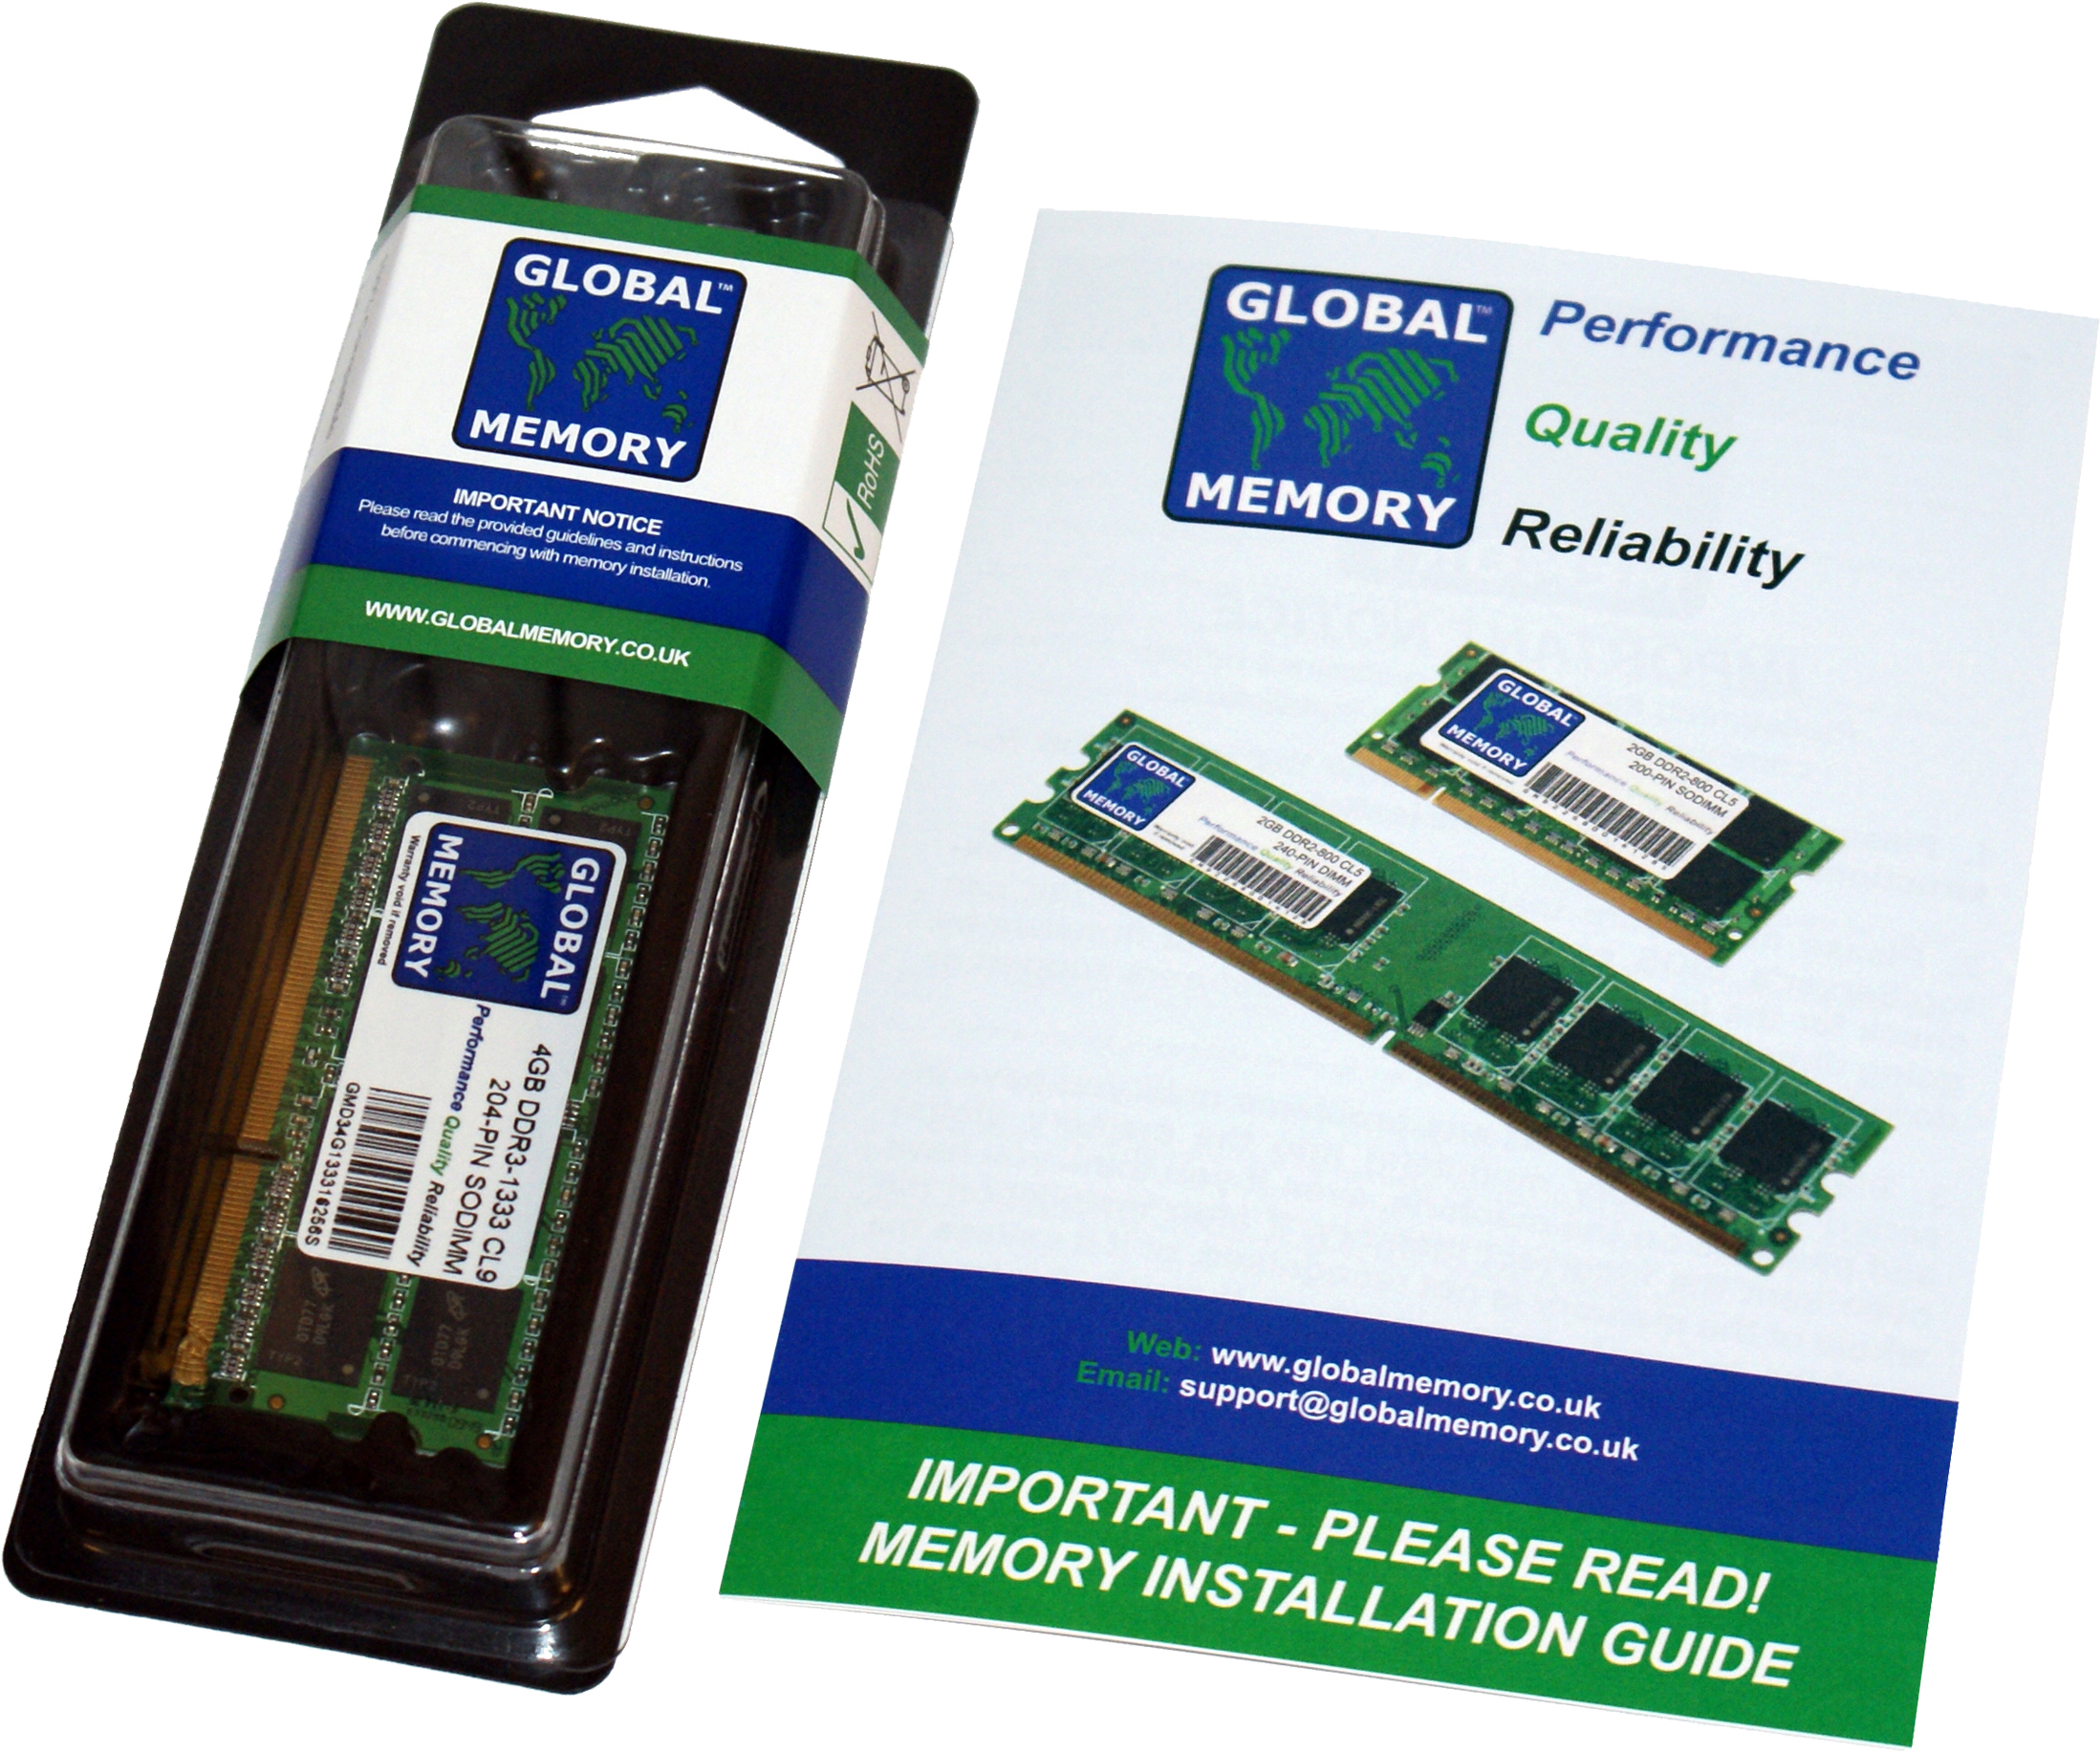 32GB DDR4 2400MHz PC4-19200 260-PIN SODIMM MEMORY RAM FOR TOSHIBA LAPTOPS/NOTEBOOKS